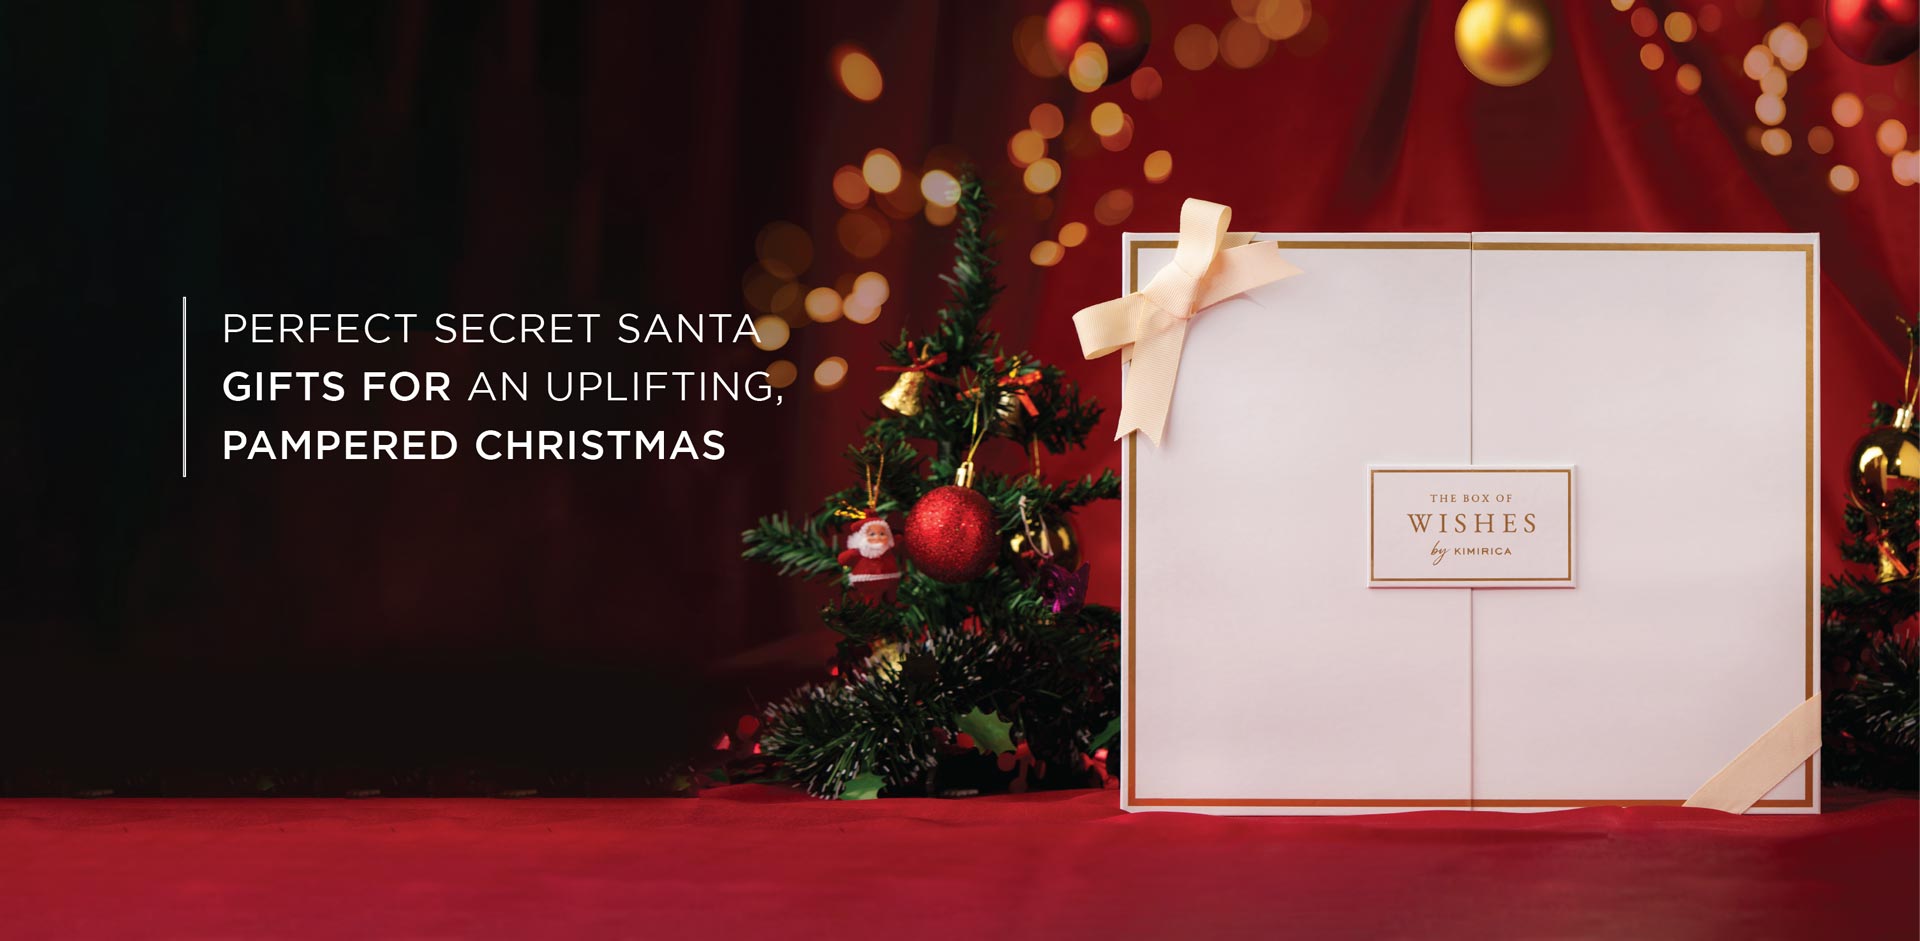 5 Secret Santa gifts under 25 USD